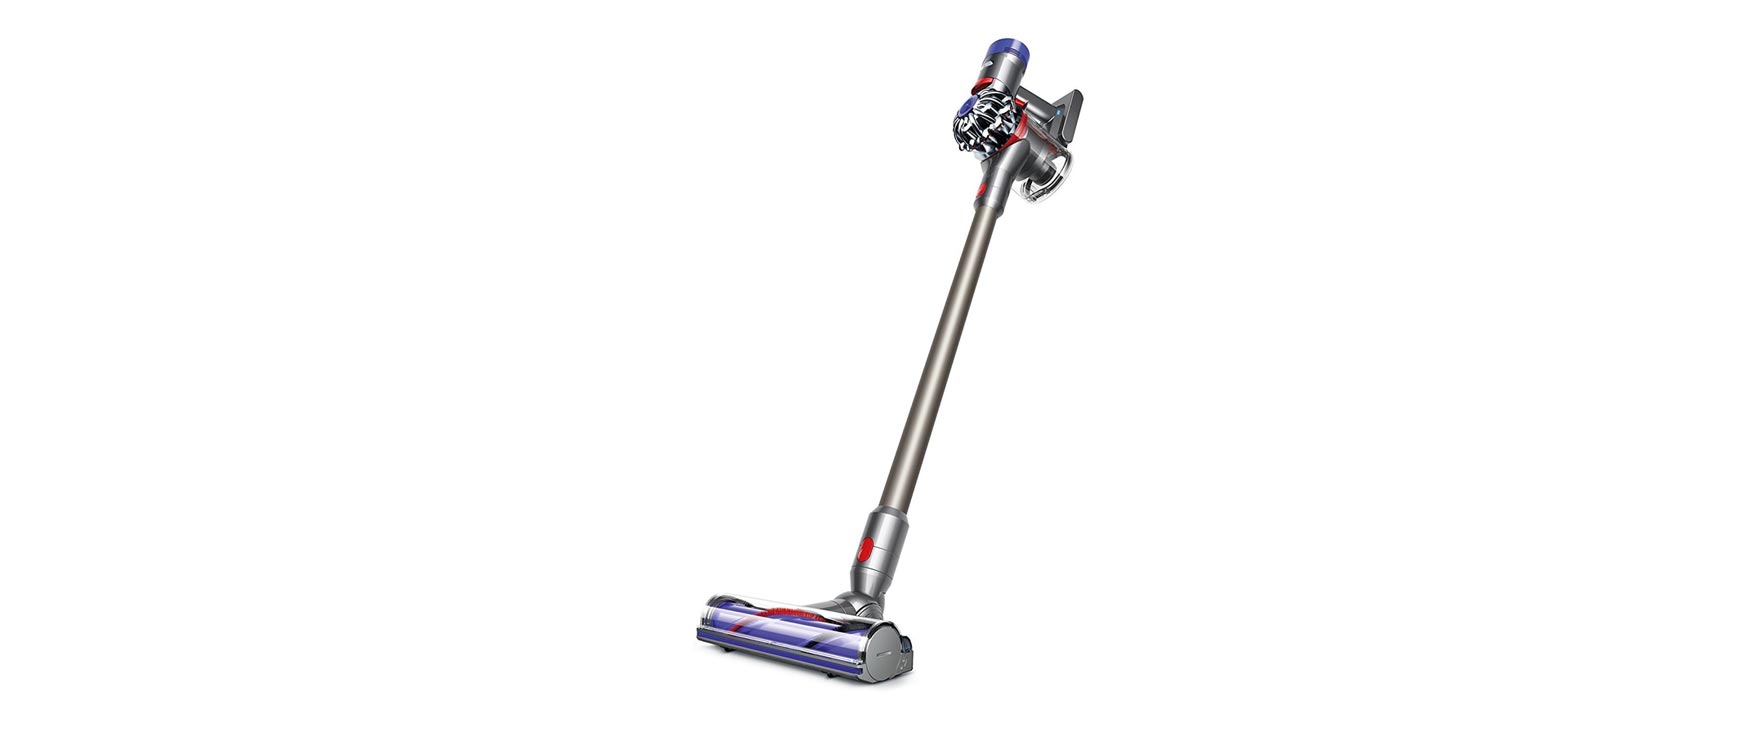 3. Dyson V8 Animal Cordless Stick Vacuum Cleaner